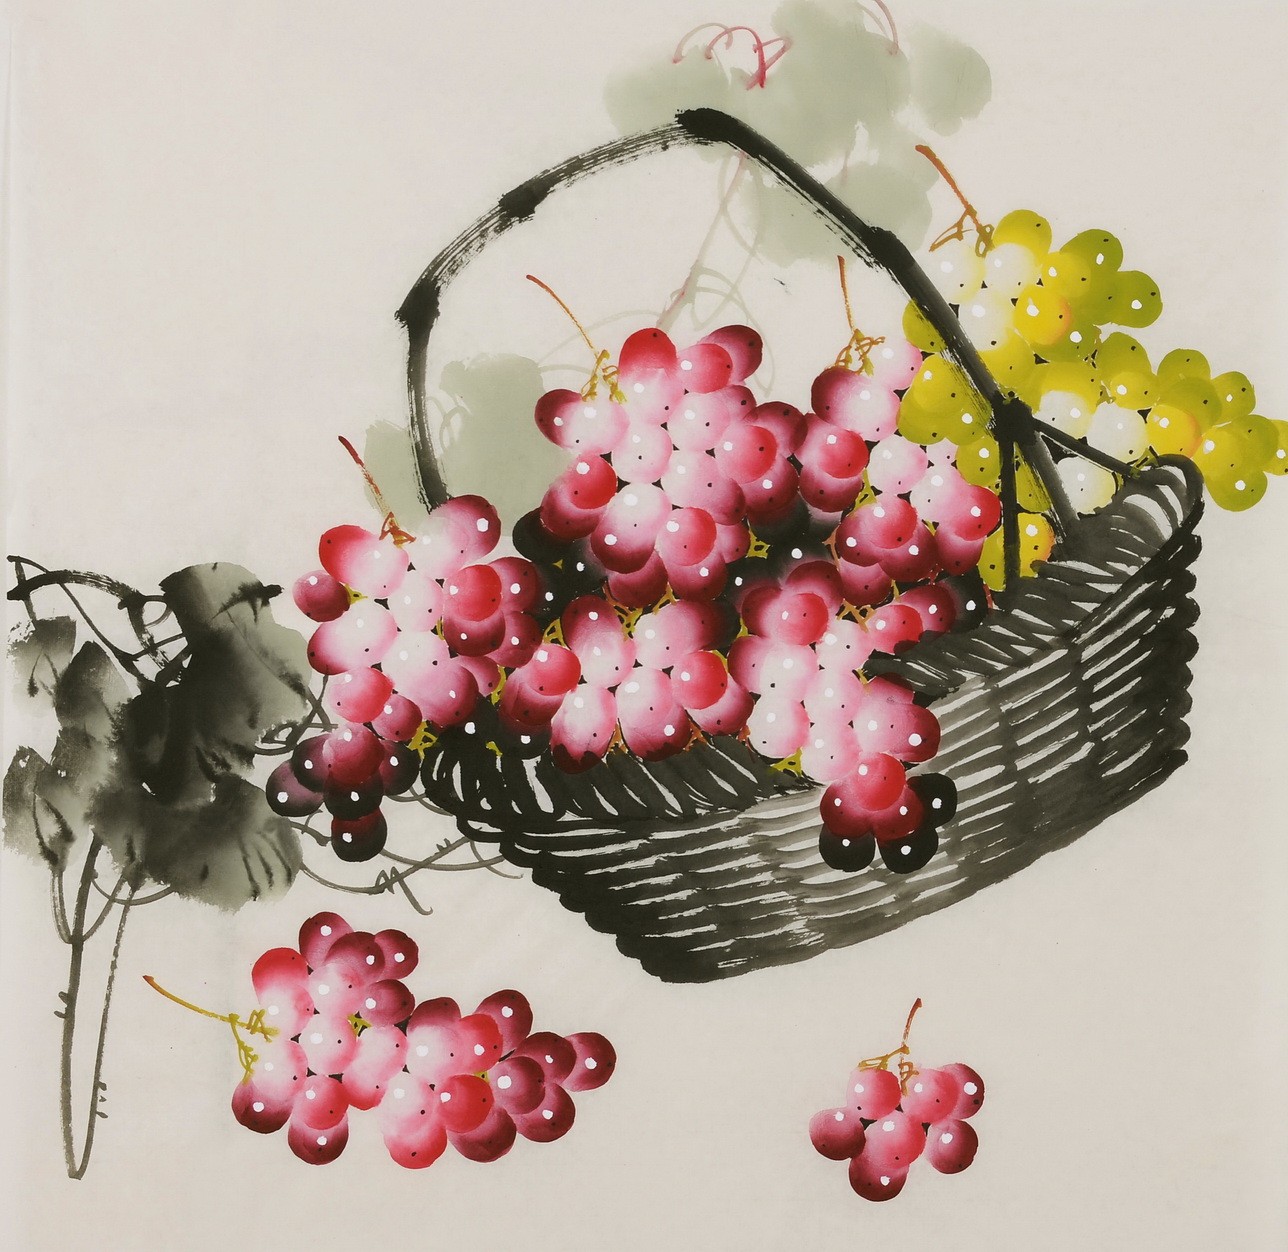 Grapes - CNAG005836